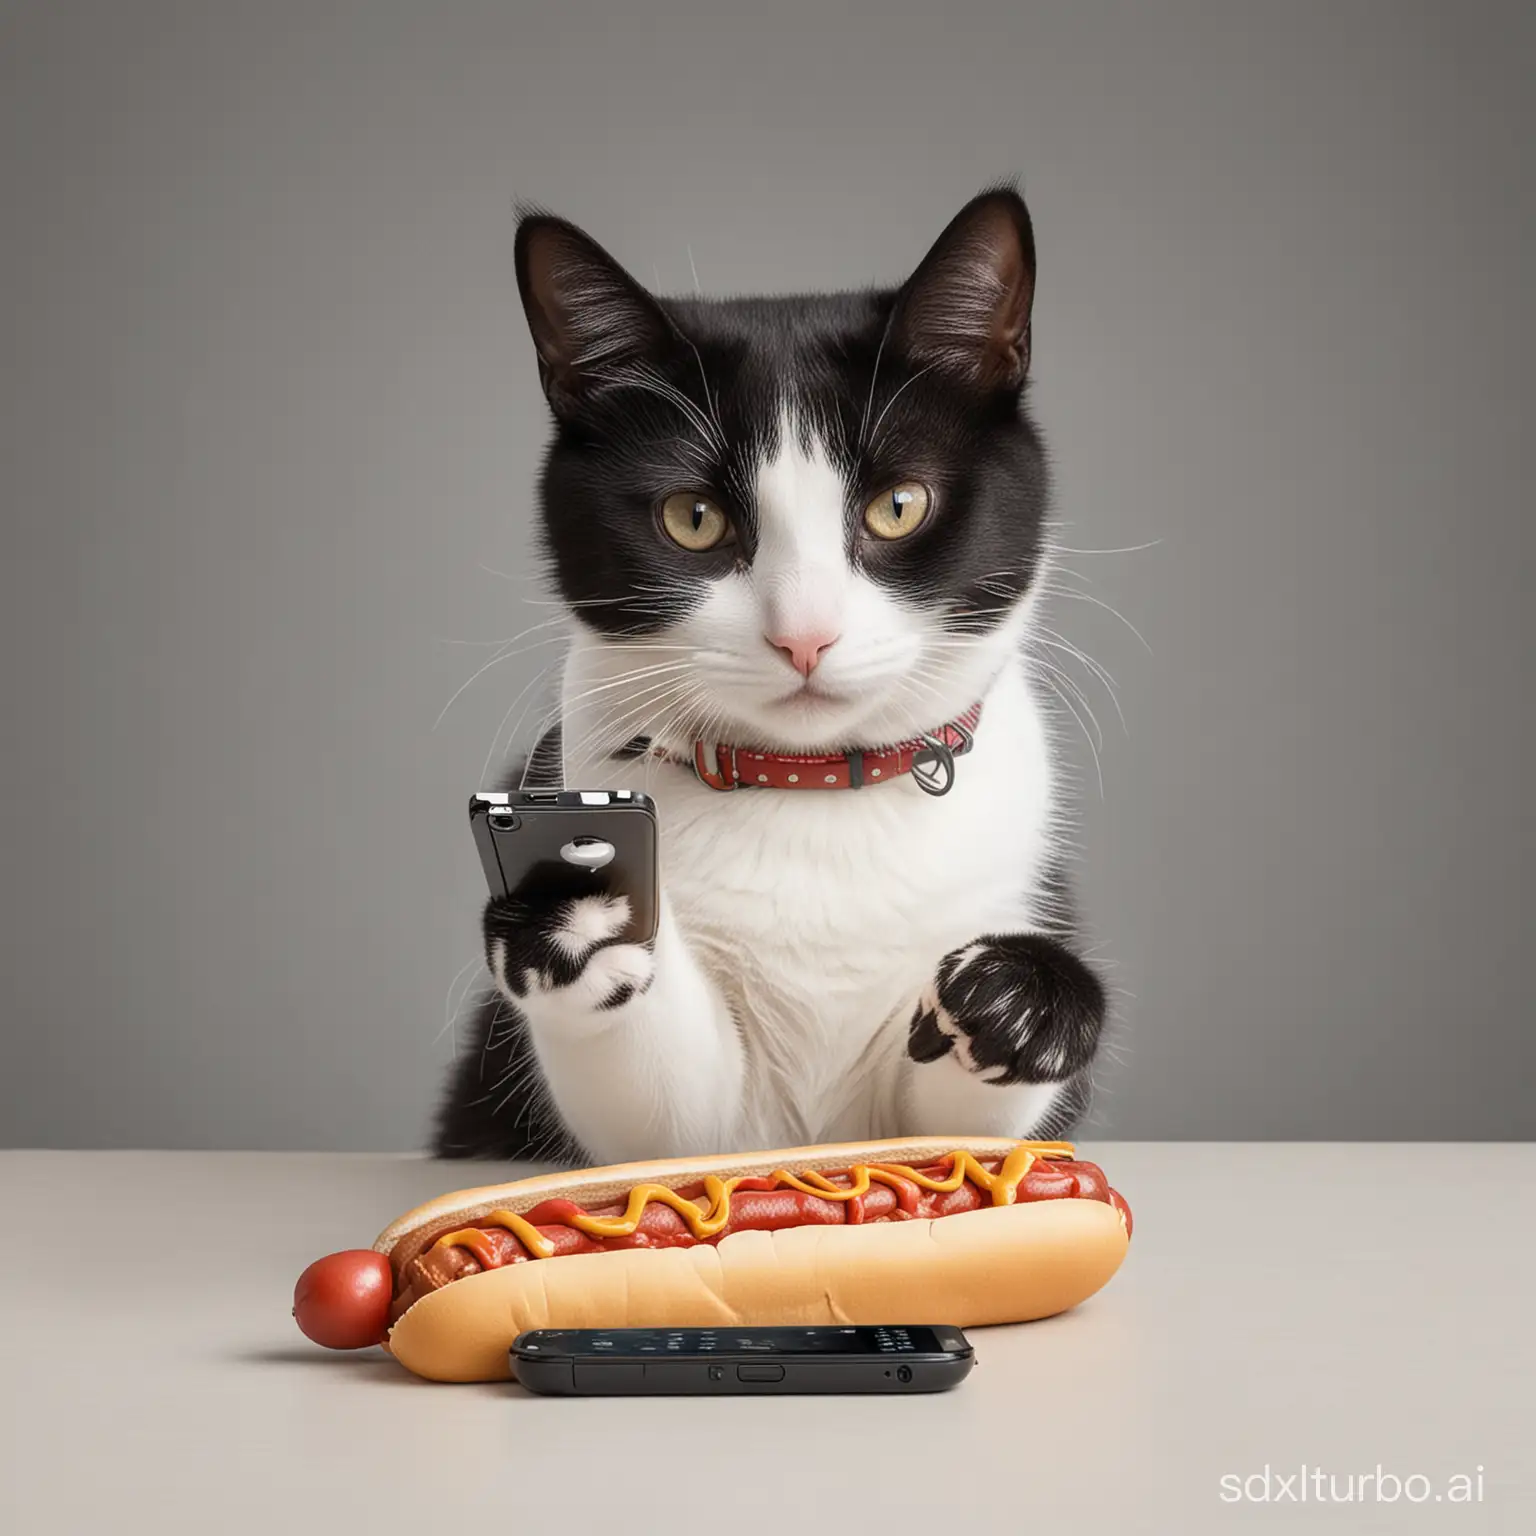 black white cat with smartphone and hotdog